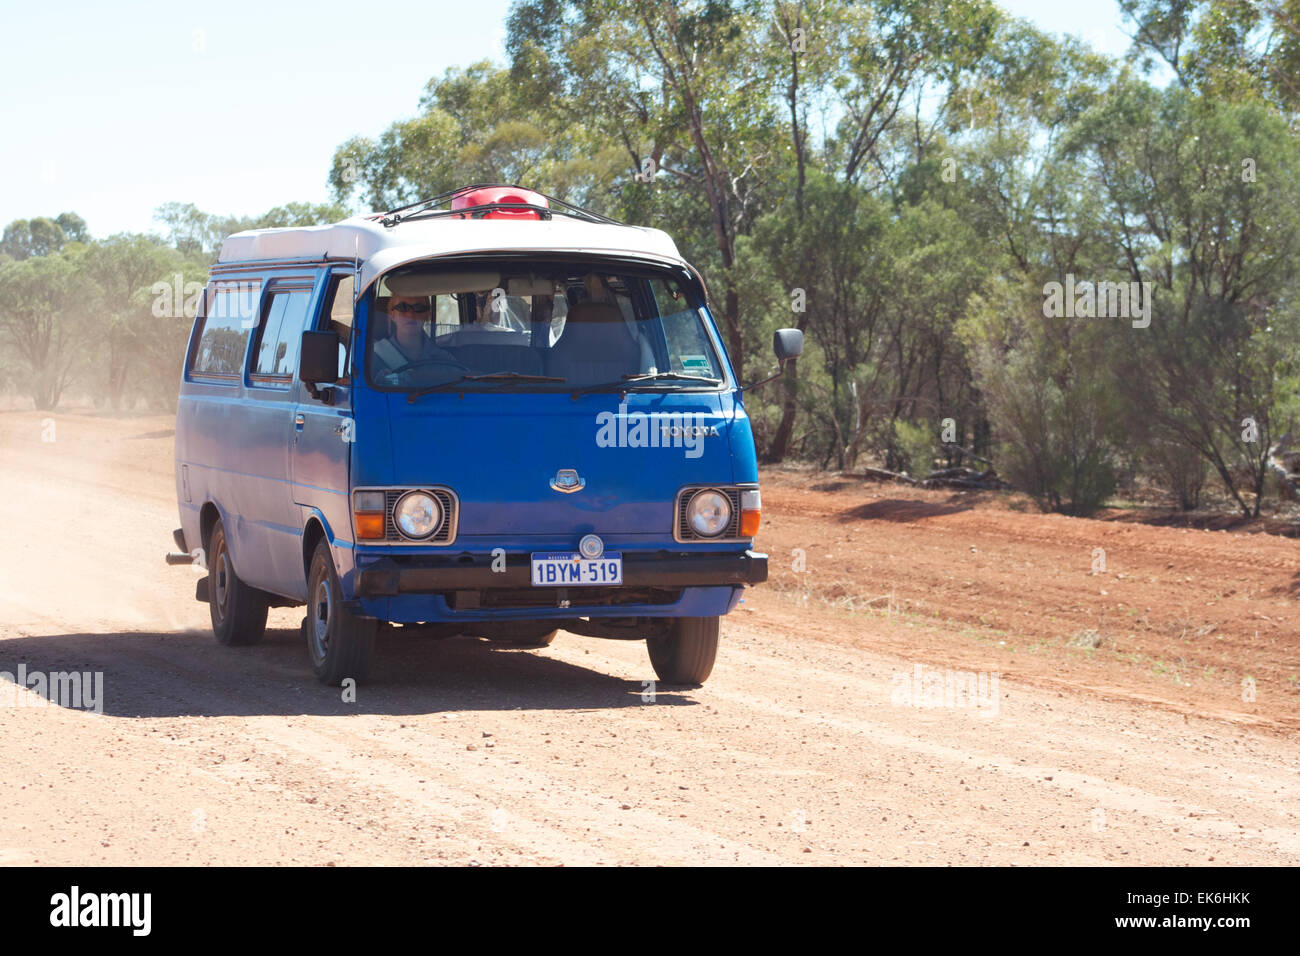 Camper van on Australian outback road Stock Photo - Alamy